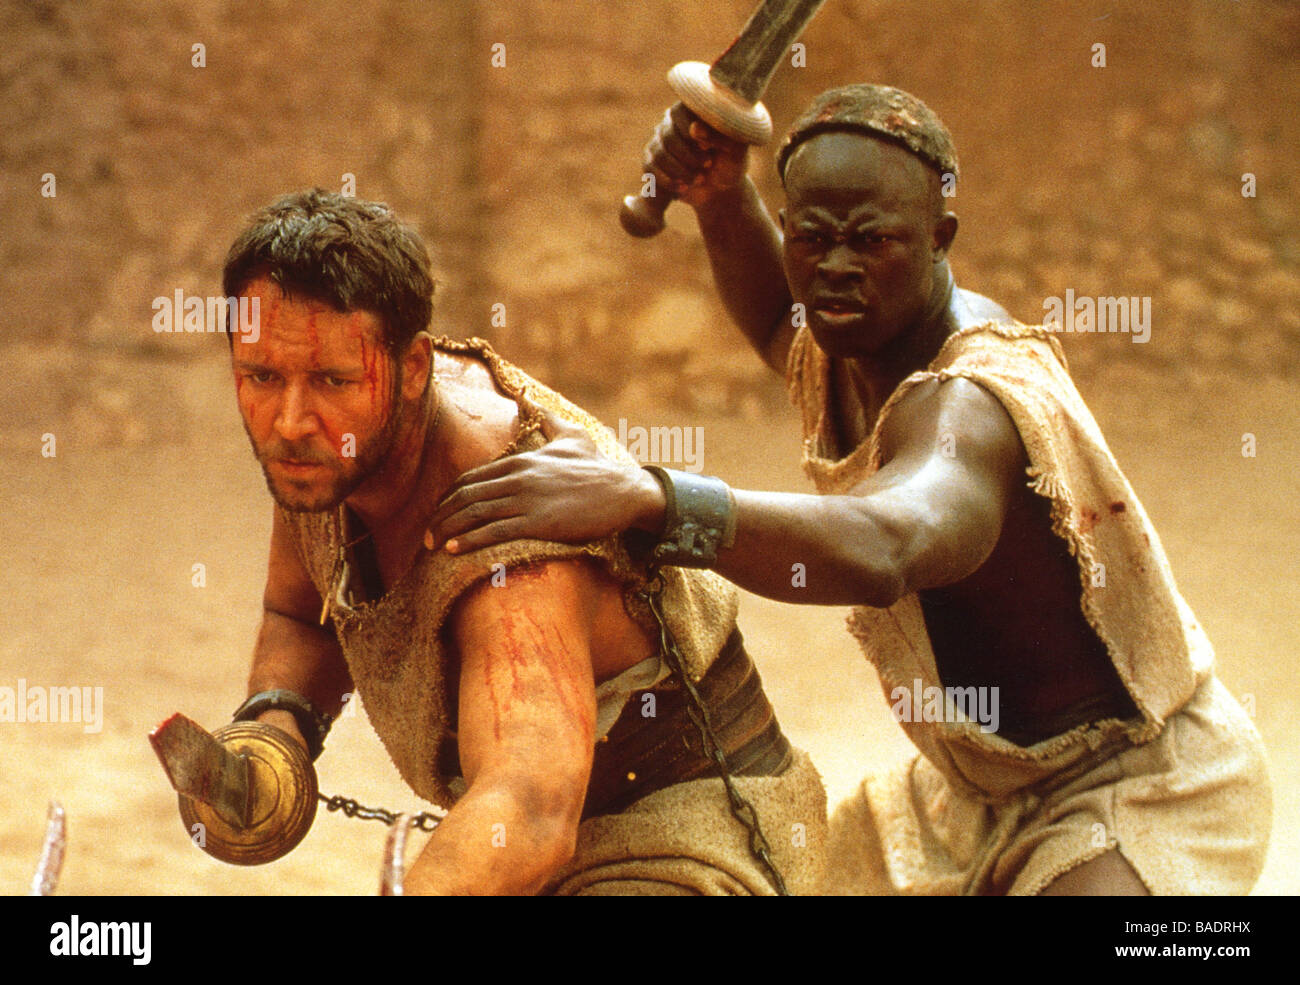 GLADIATOR 2000 película Universal con Russell Crowe y Djimon Hounsou a izquierda Foto de stock